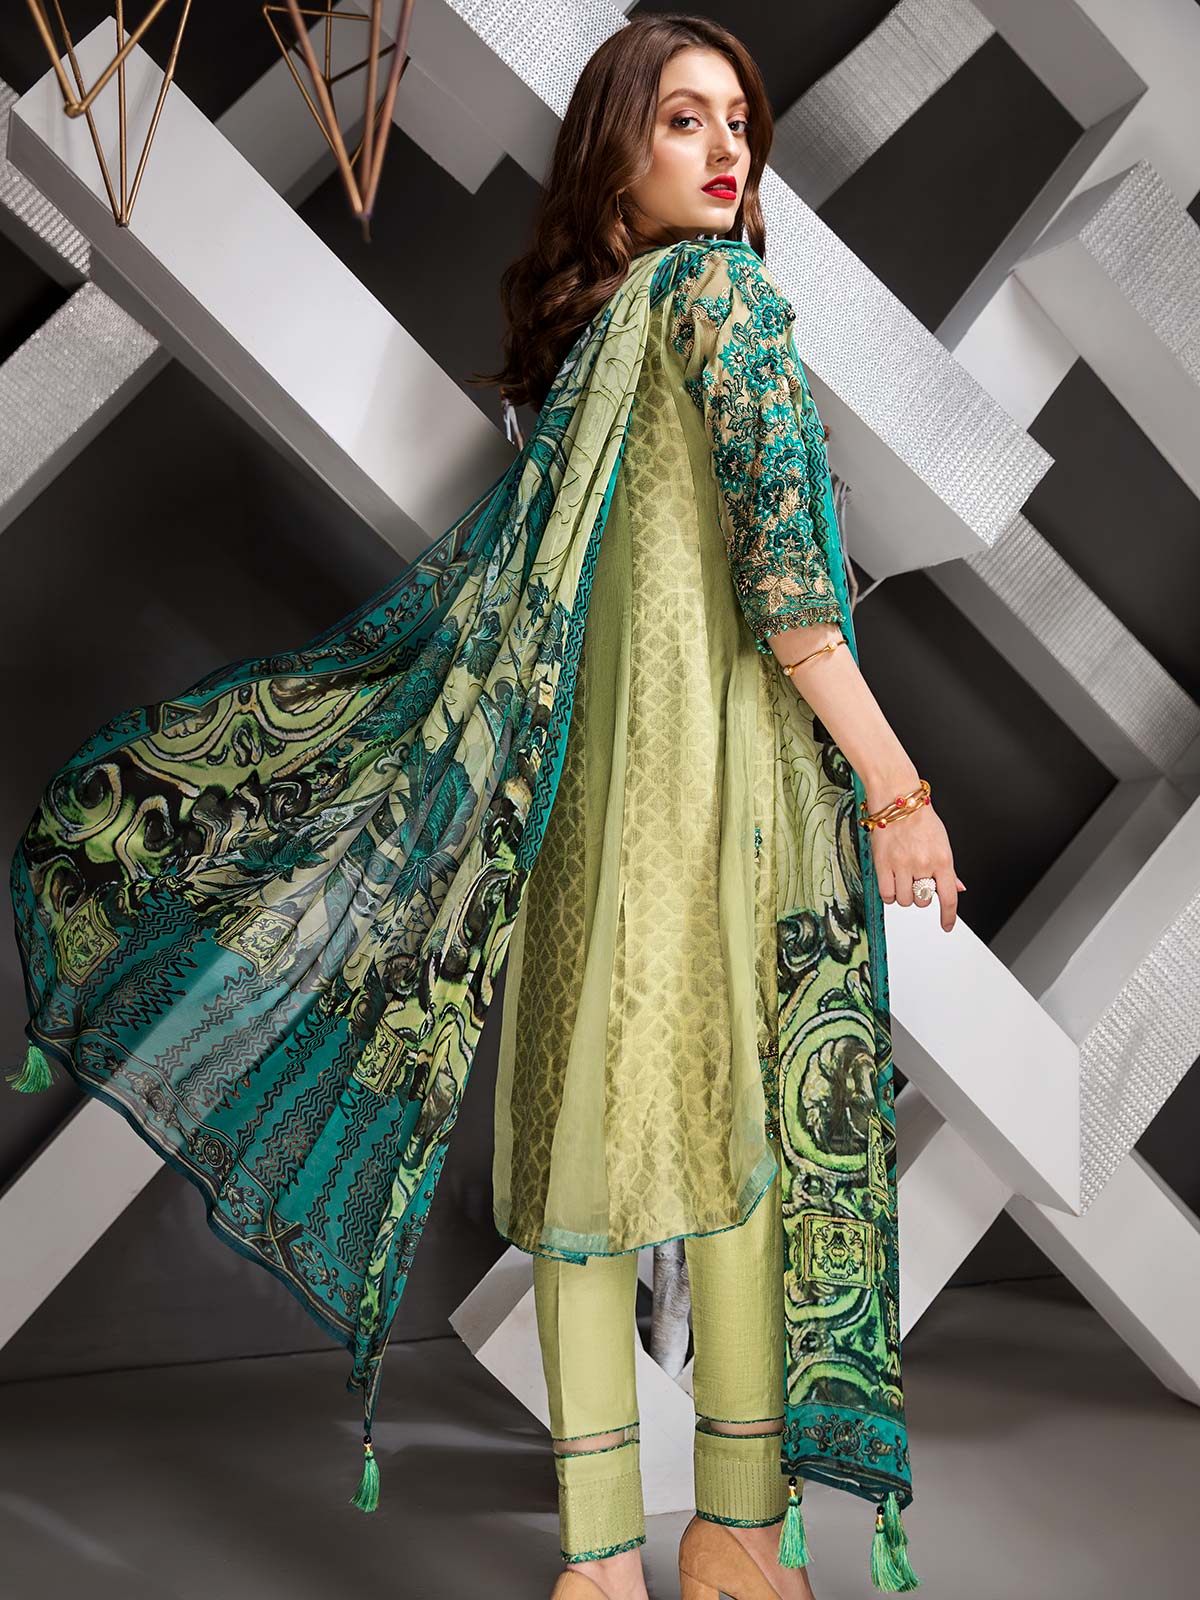 Ravishing green net dress by Eden robe Pakistani eid dresses